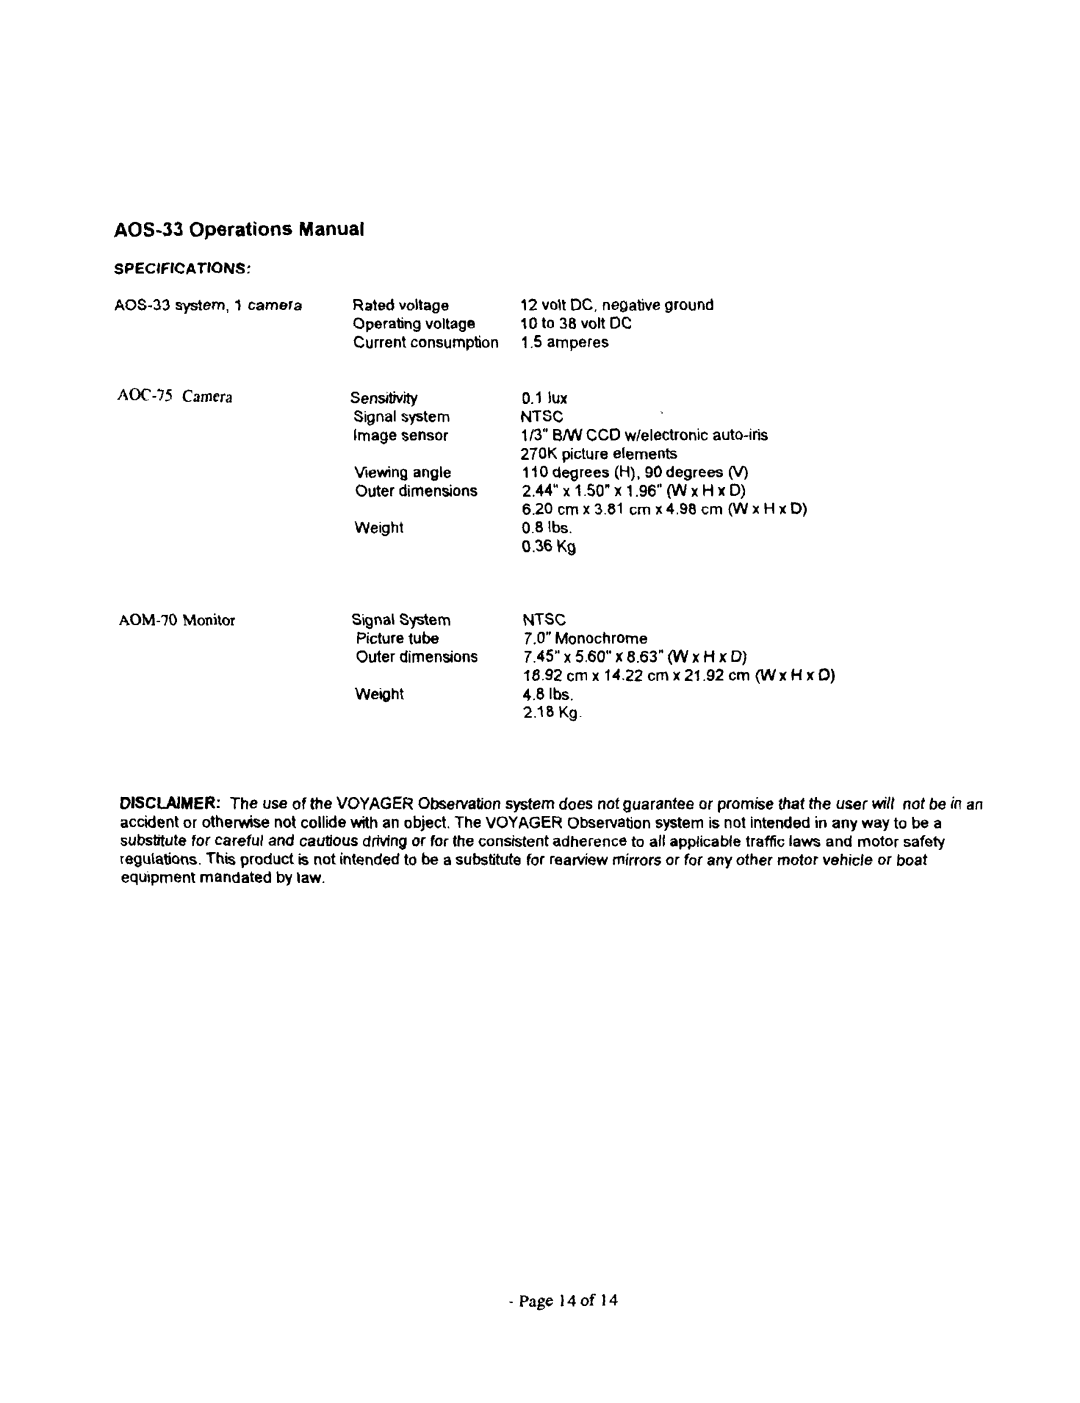 ASA Electronics manual AOS-33Operations Manual, Specifications 